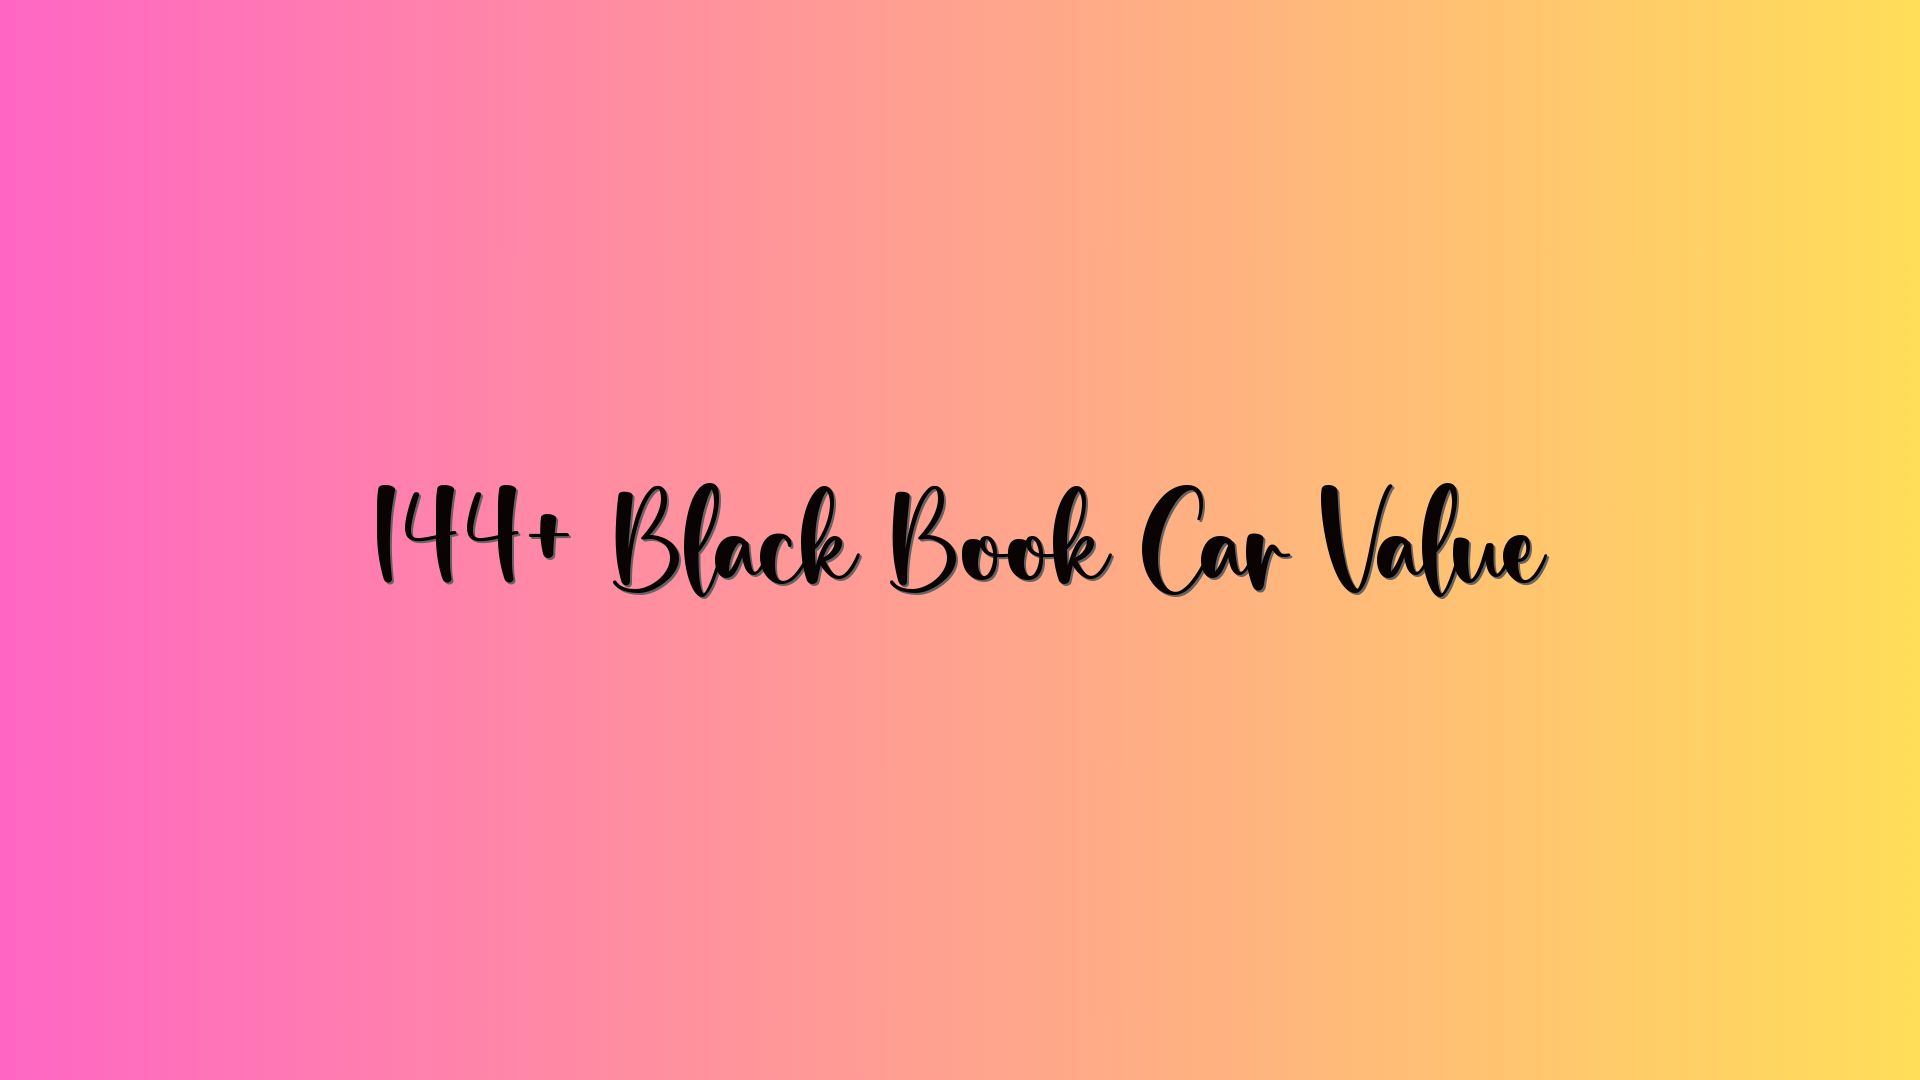 144+ Black Book Car Value